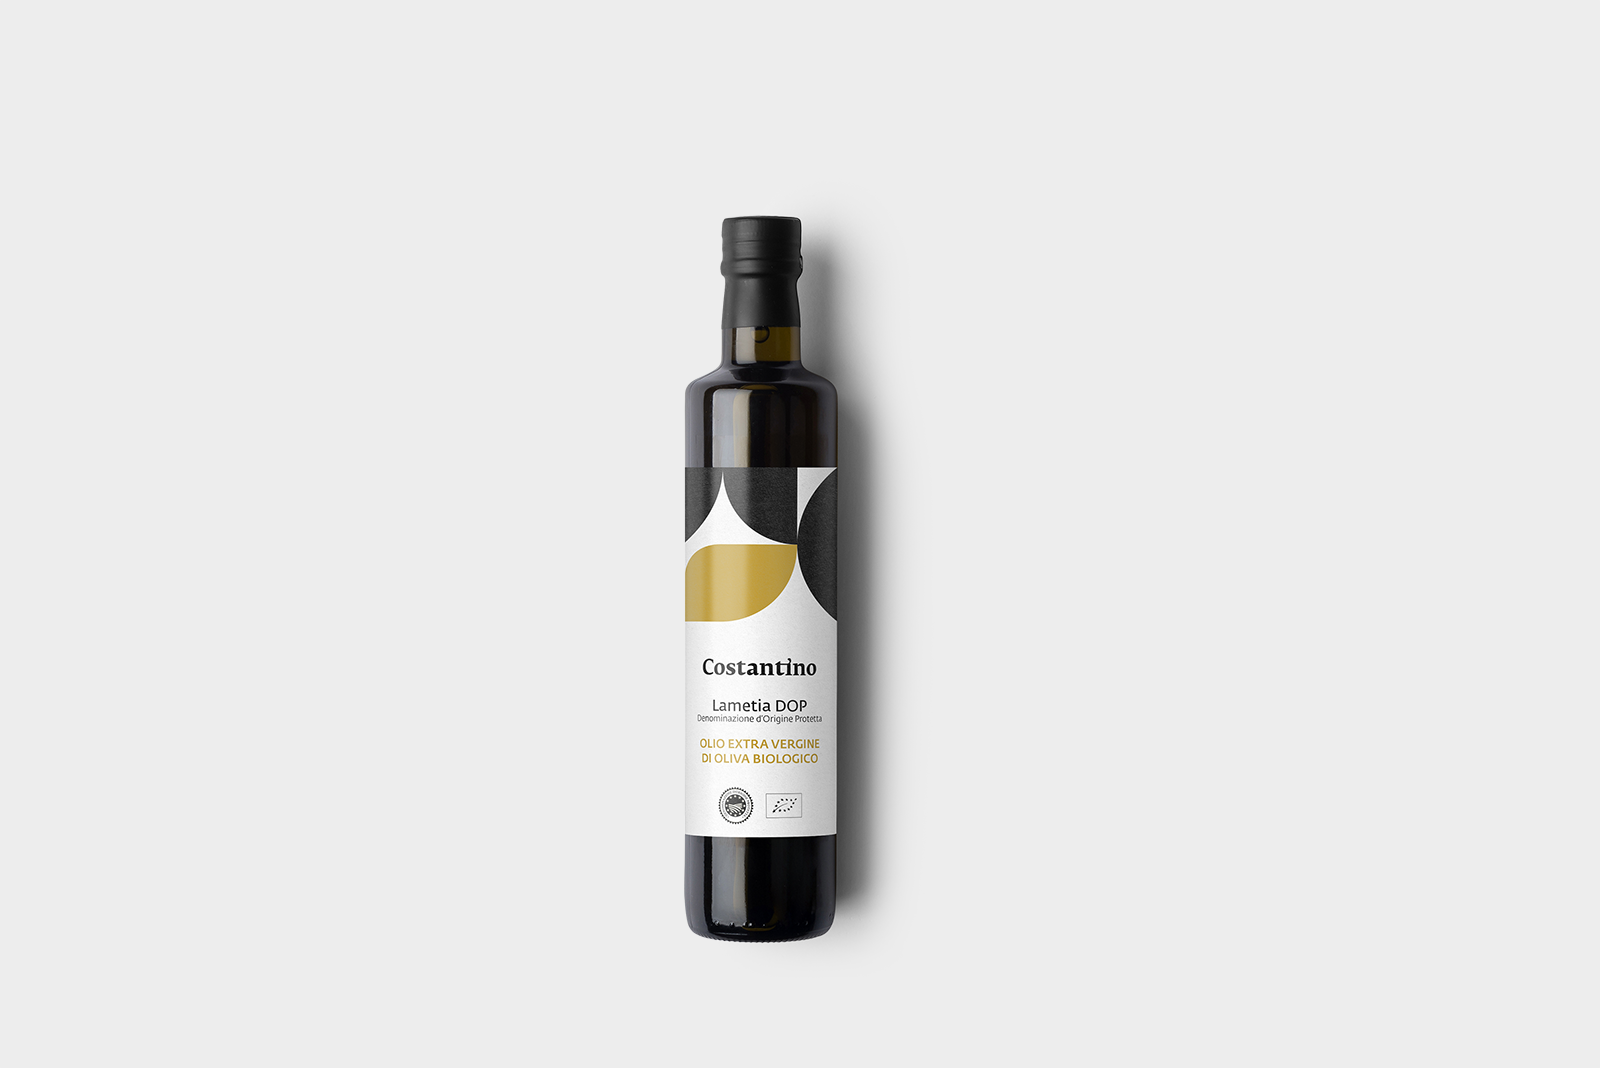 Costantino - Olio Extra Vergine d’Oliva Biologico Dop Lamezia - bottiglia 25cl